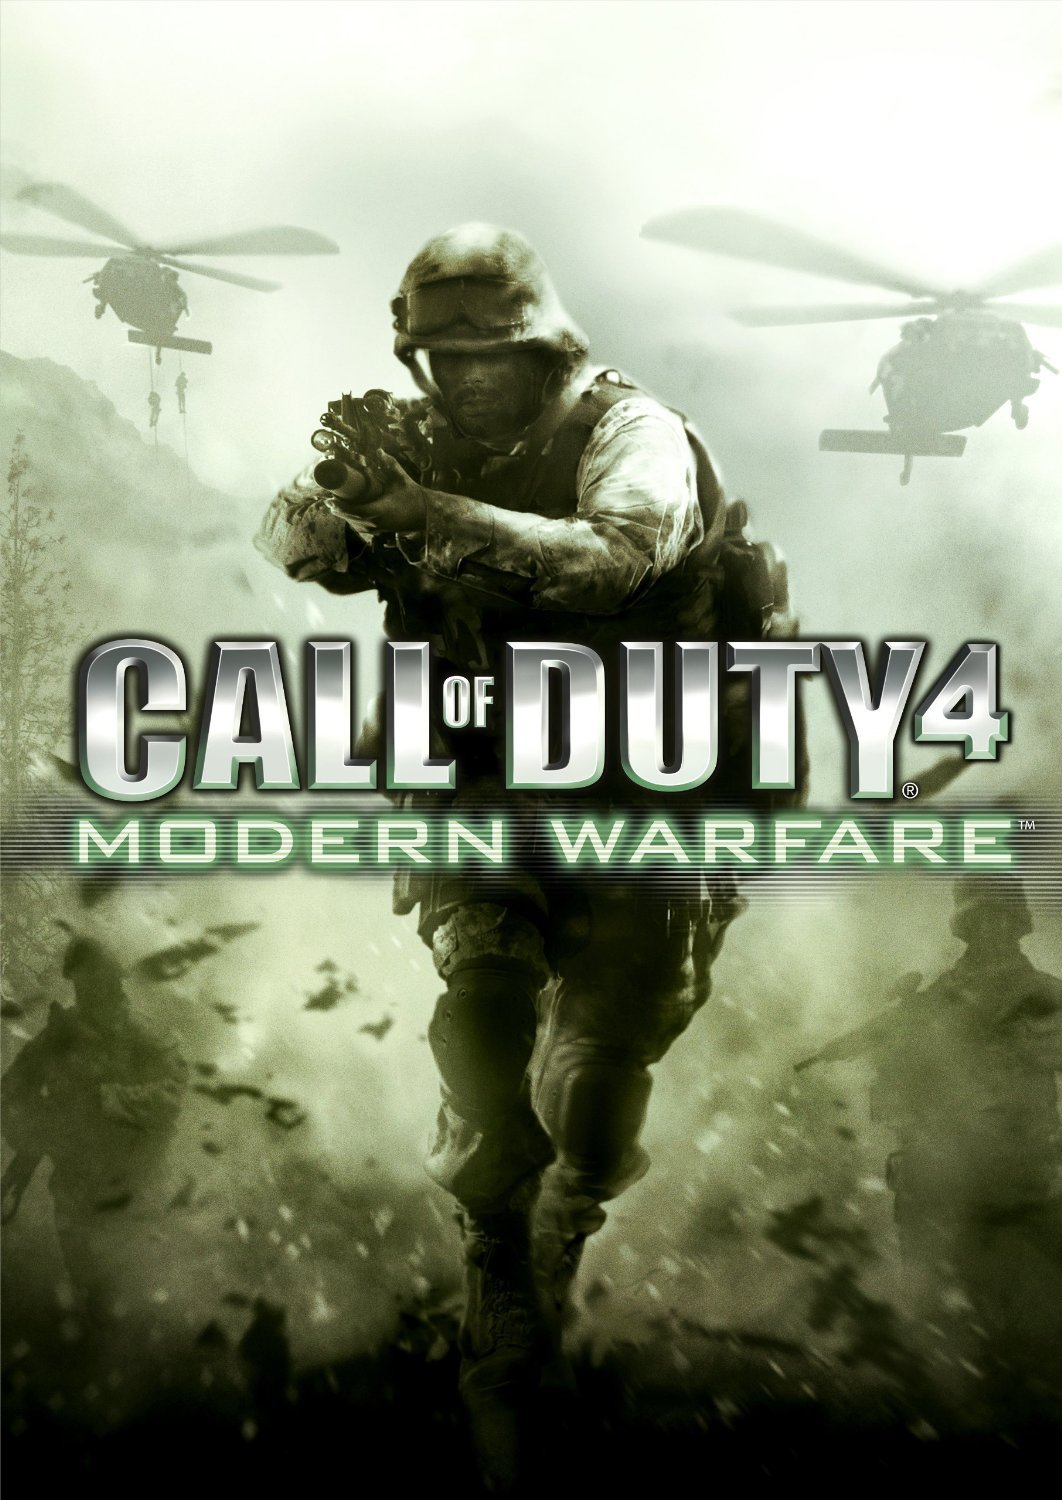 Image of Call of Duty 4: Modern Warfare